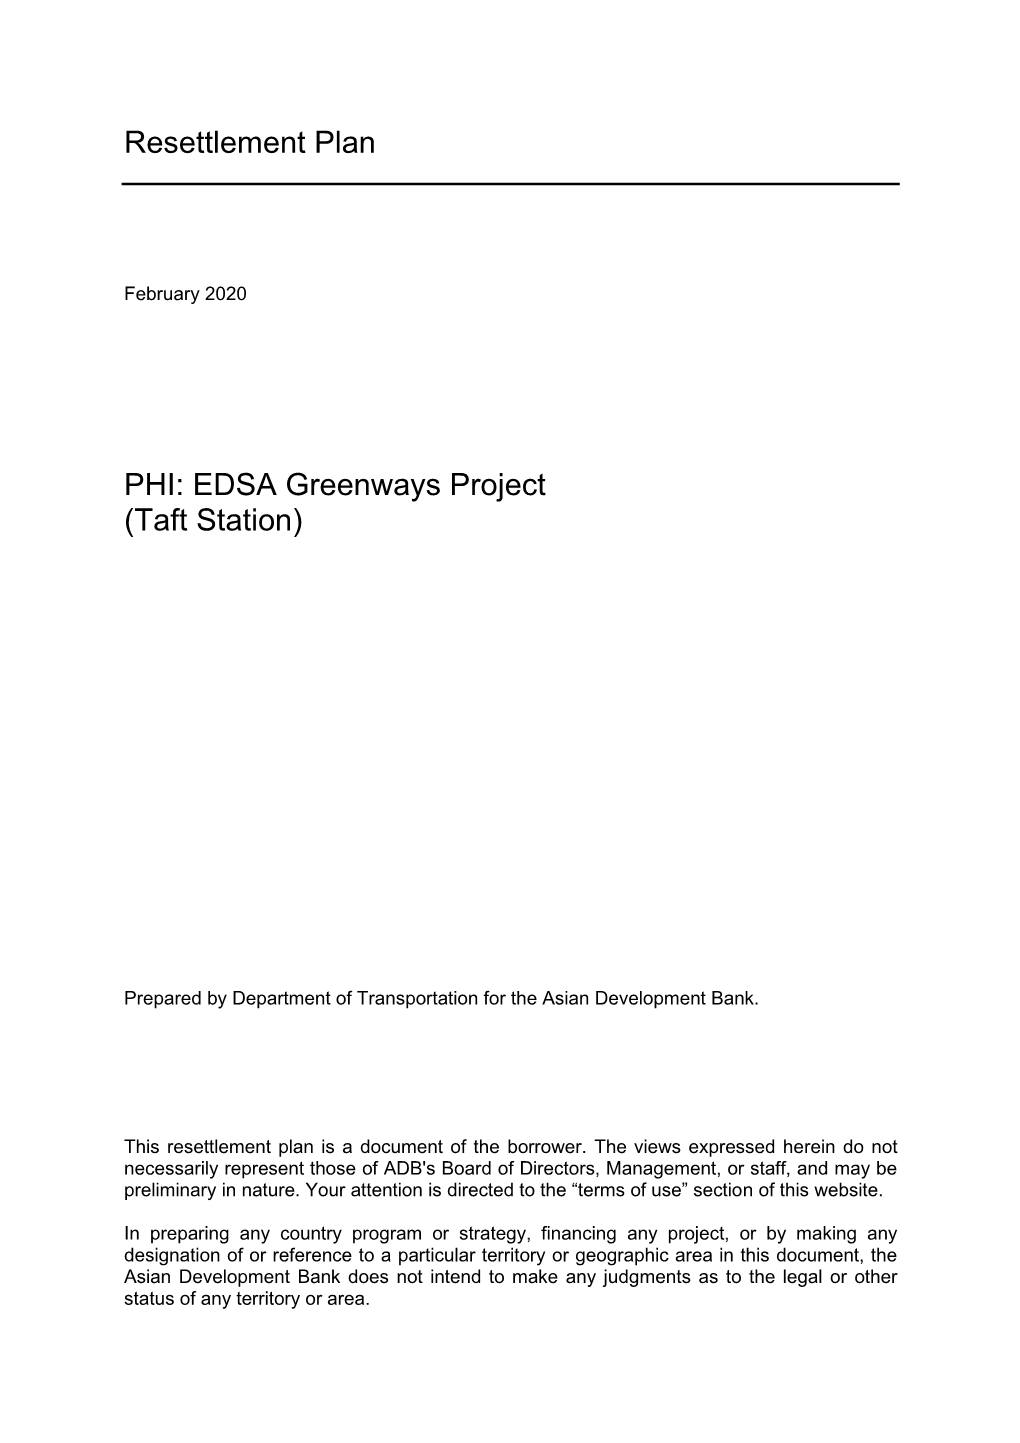 Resettlement Plan PHI: EDSA Greenways Project (Taft Station)